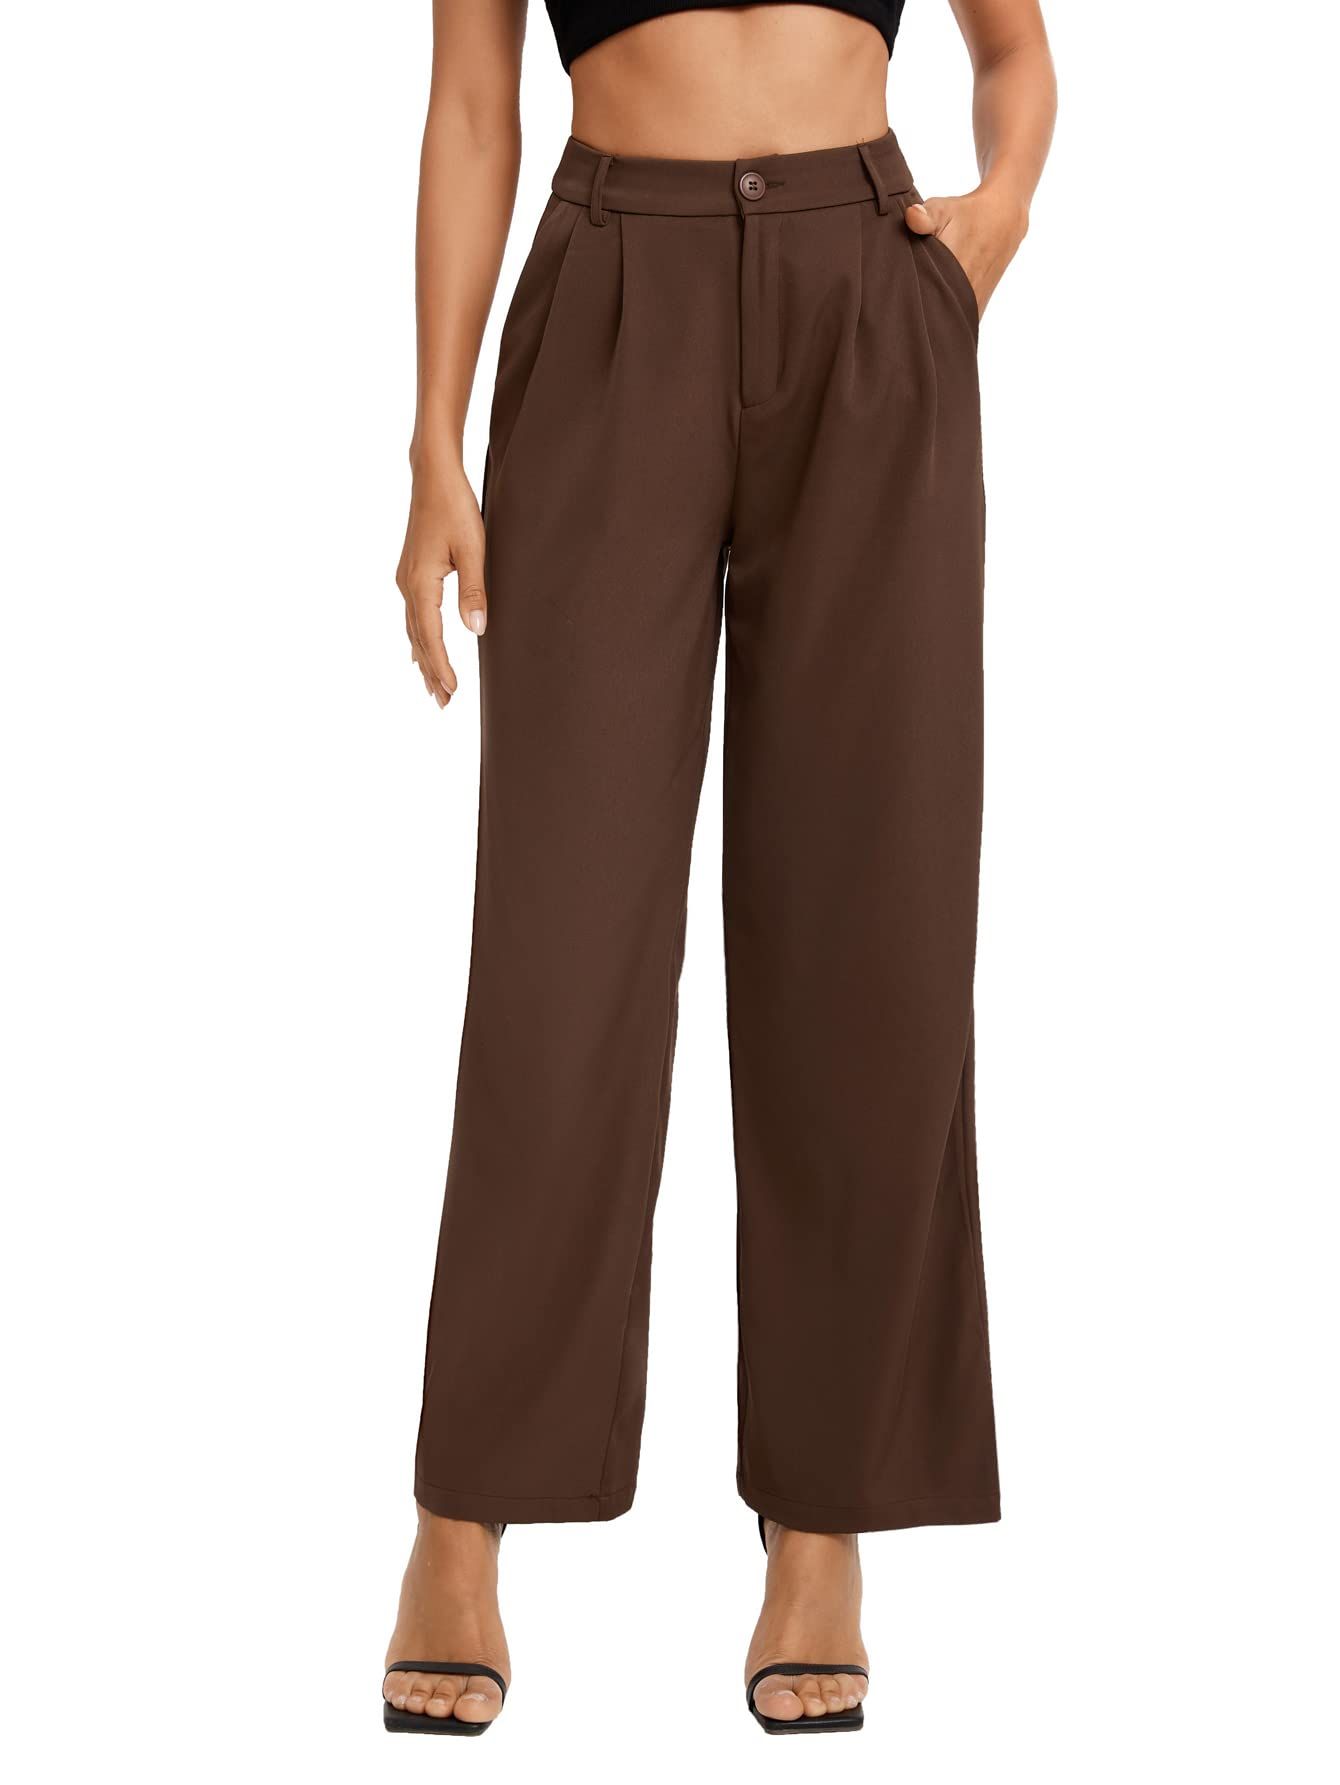 Buy SweatyRocks Women's Elegant High Waist Solid Long Pants Office Trousers,  Burgundy, X-Small at Amazon.in